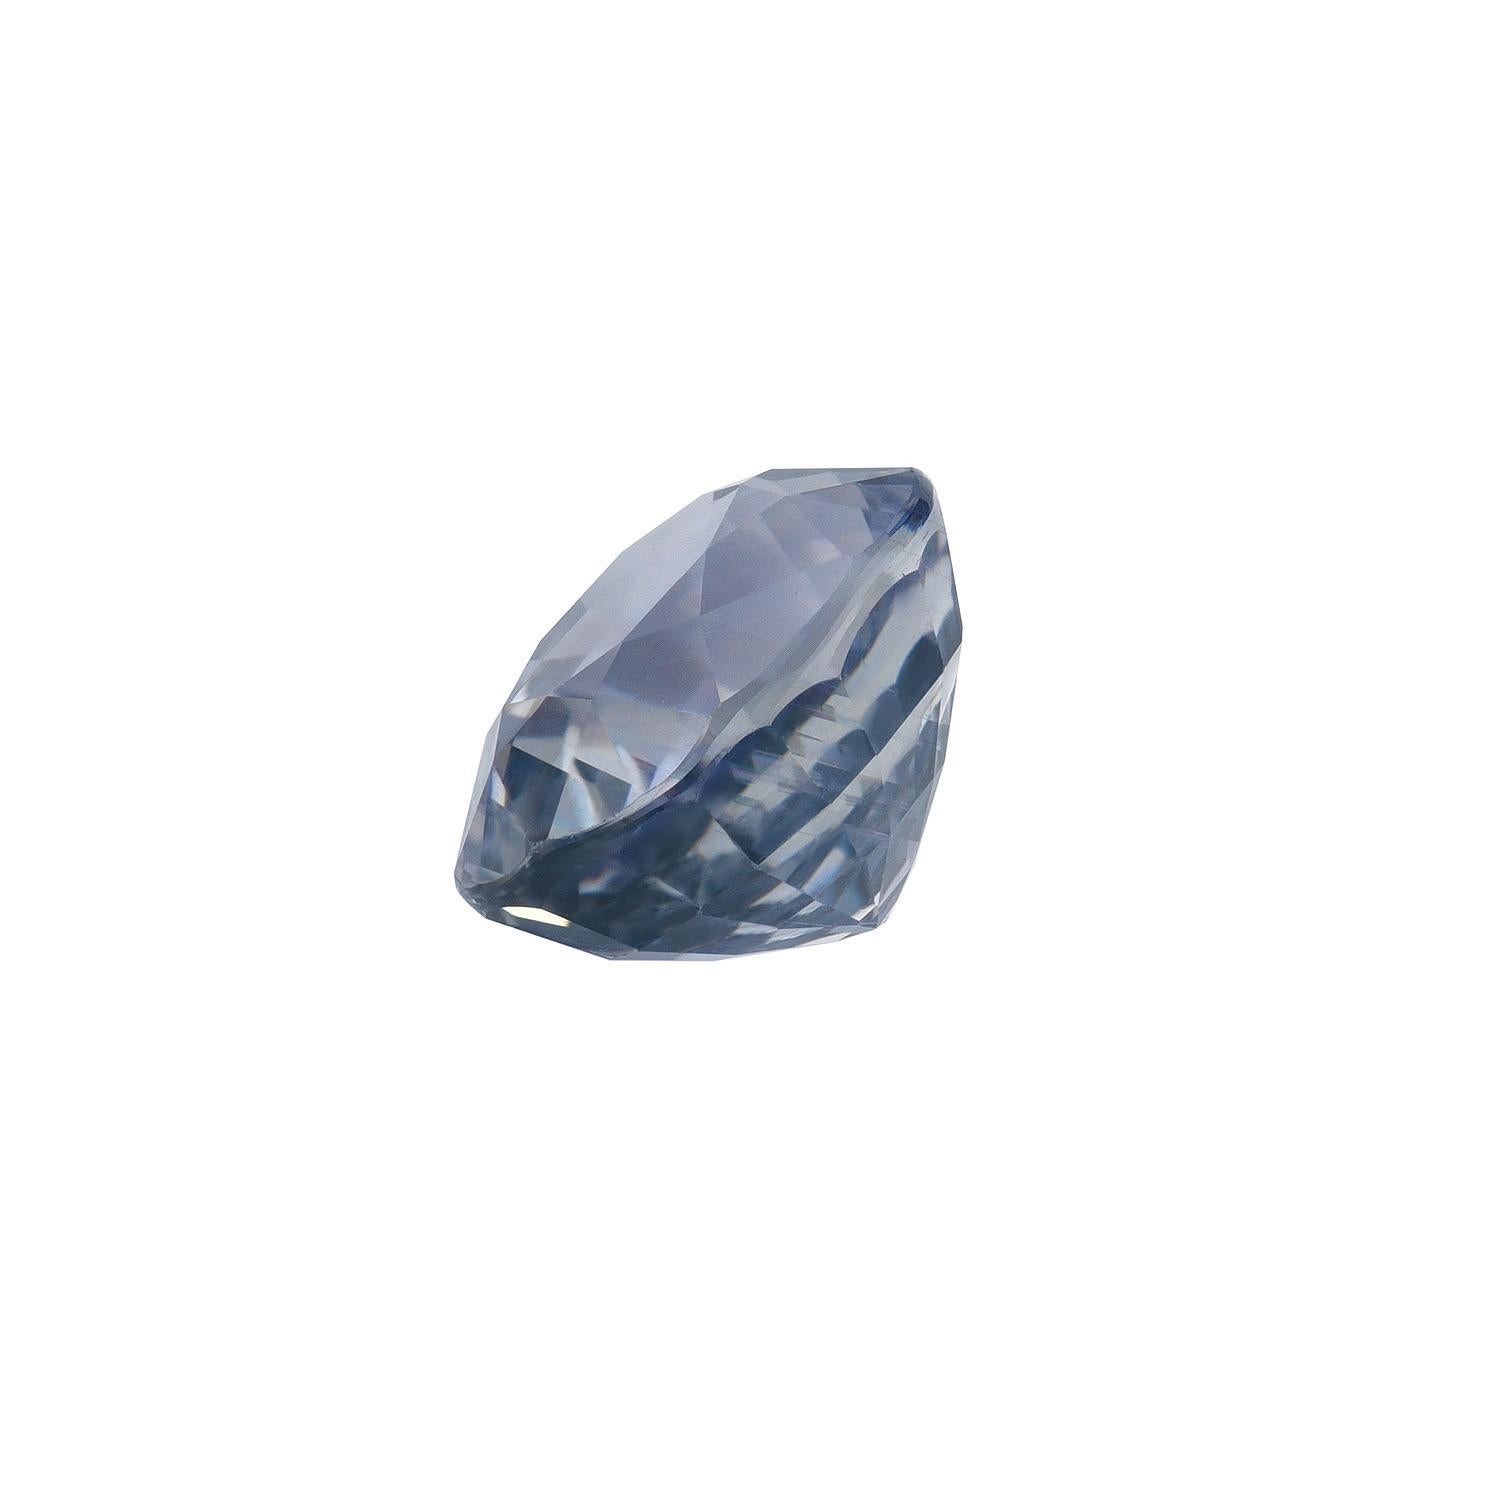 Oval Cut Unheated Light Violet Sapphire Ring Gem 3.41 Carat Oval Loose Gemstone For Sale